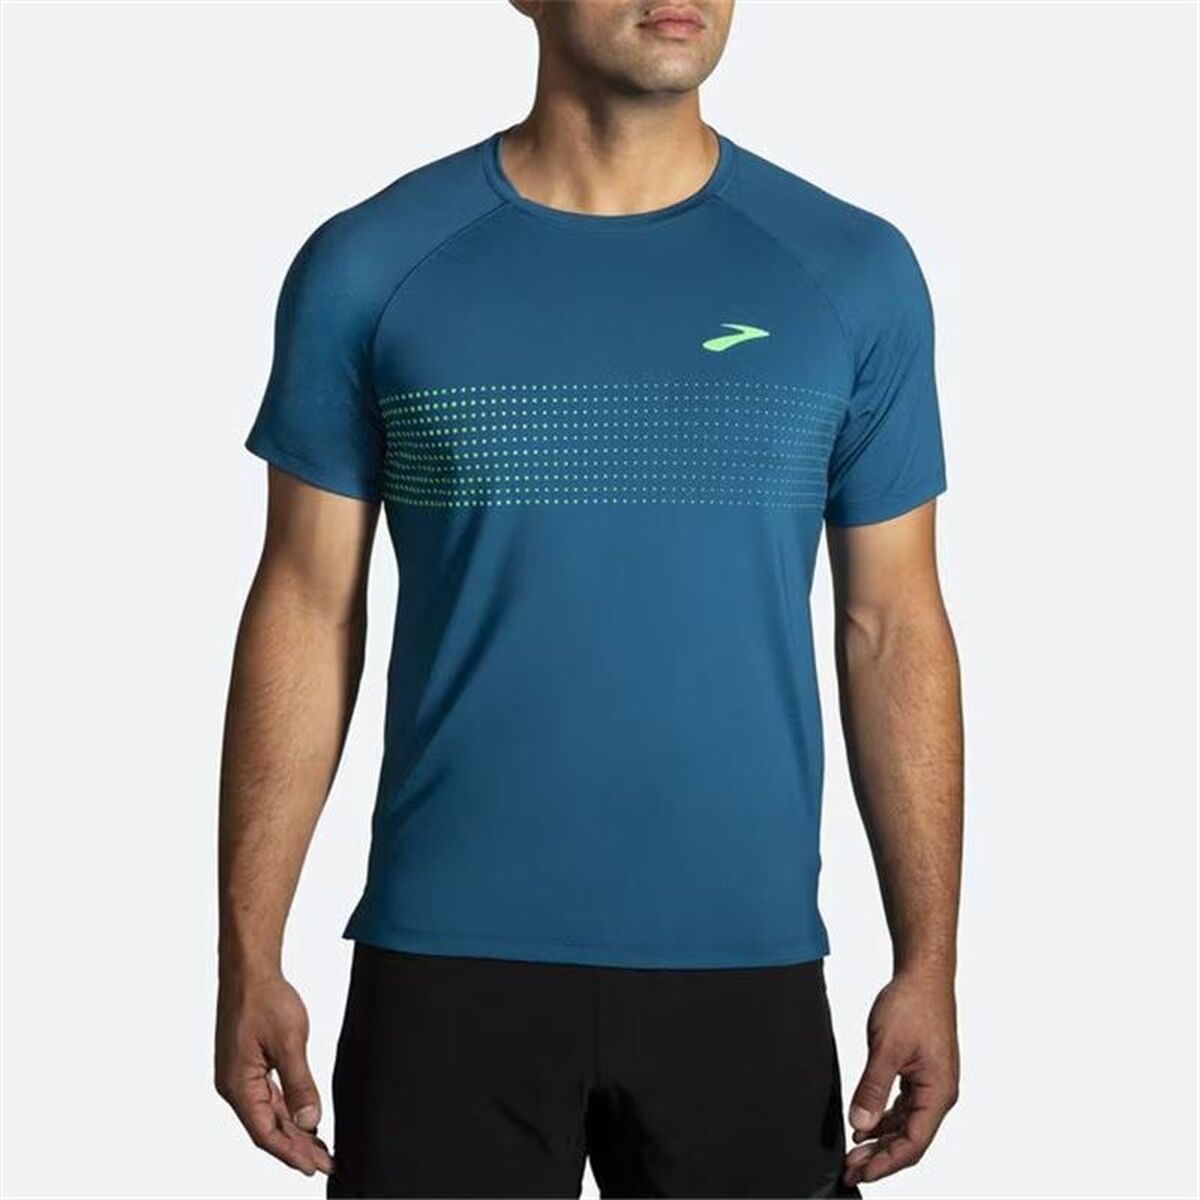 Men’s Short Sleeve T-Shirt Brooks Atmosphere  2.0 Cyan